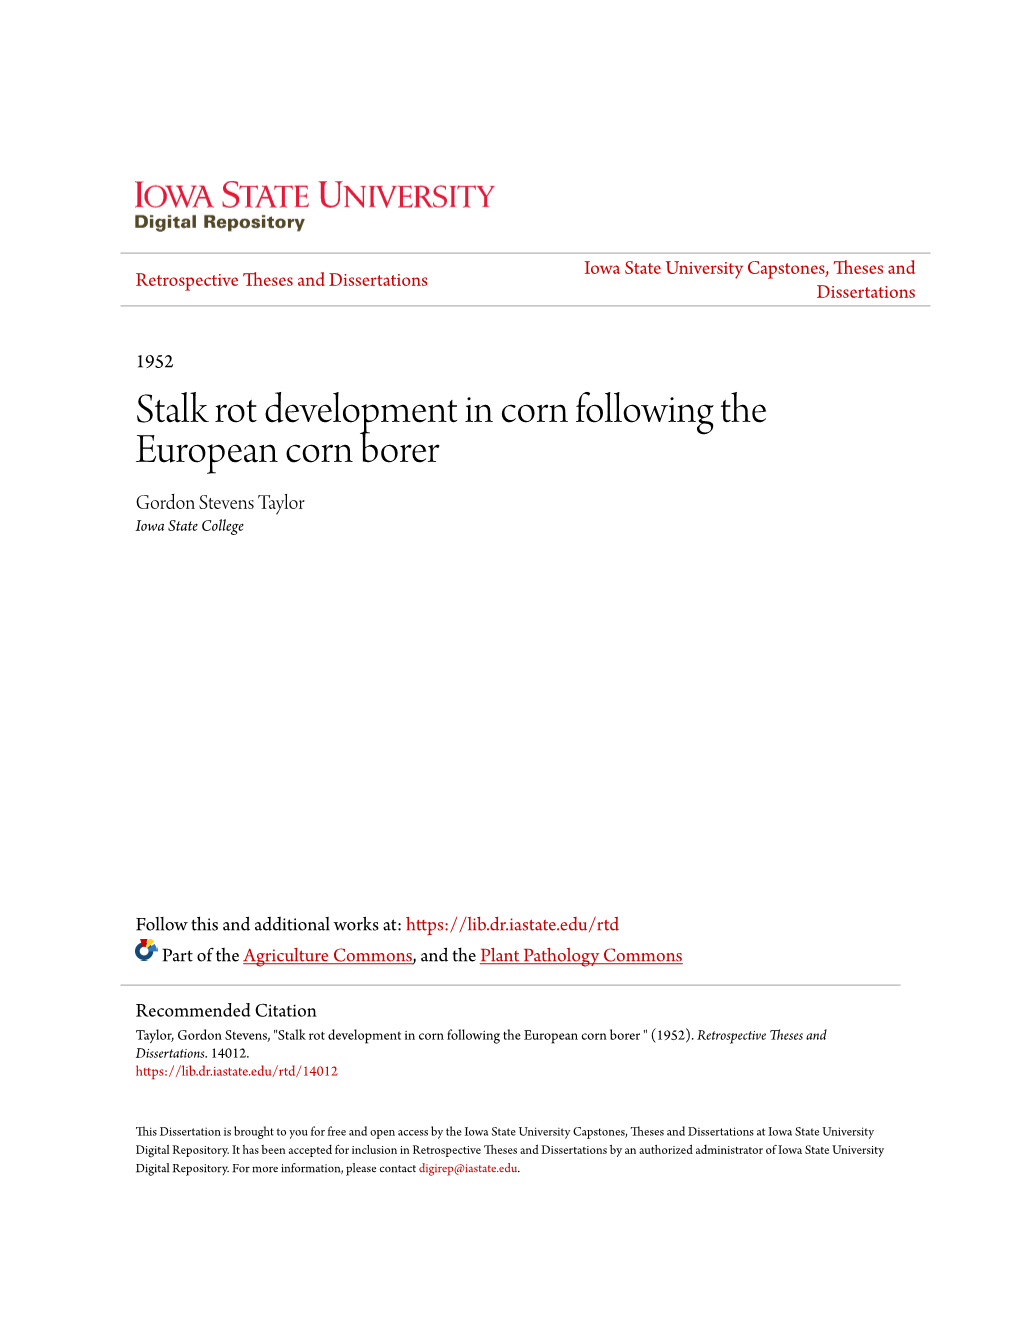 Stalk Rot Development in Corn Following the European Corn Borer Gordon Stevens Taylor Iowa State College